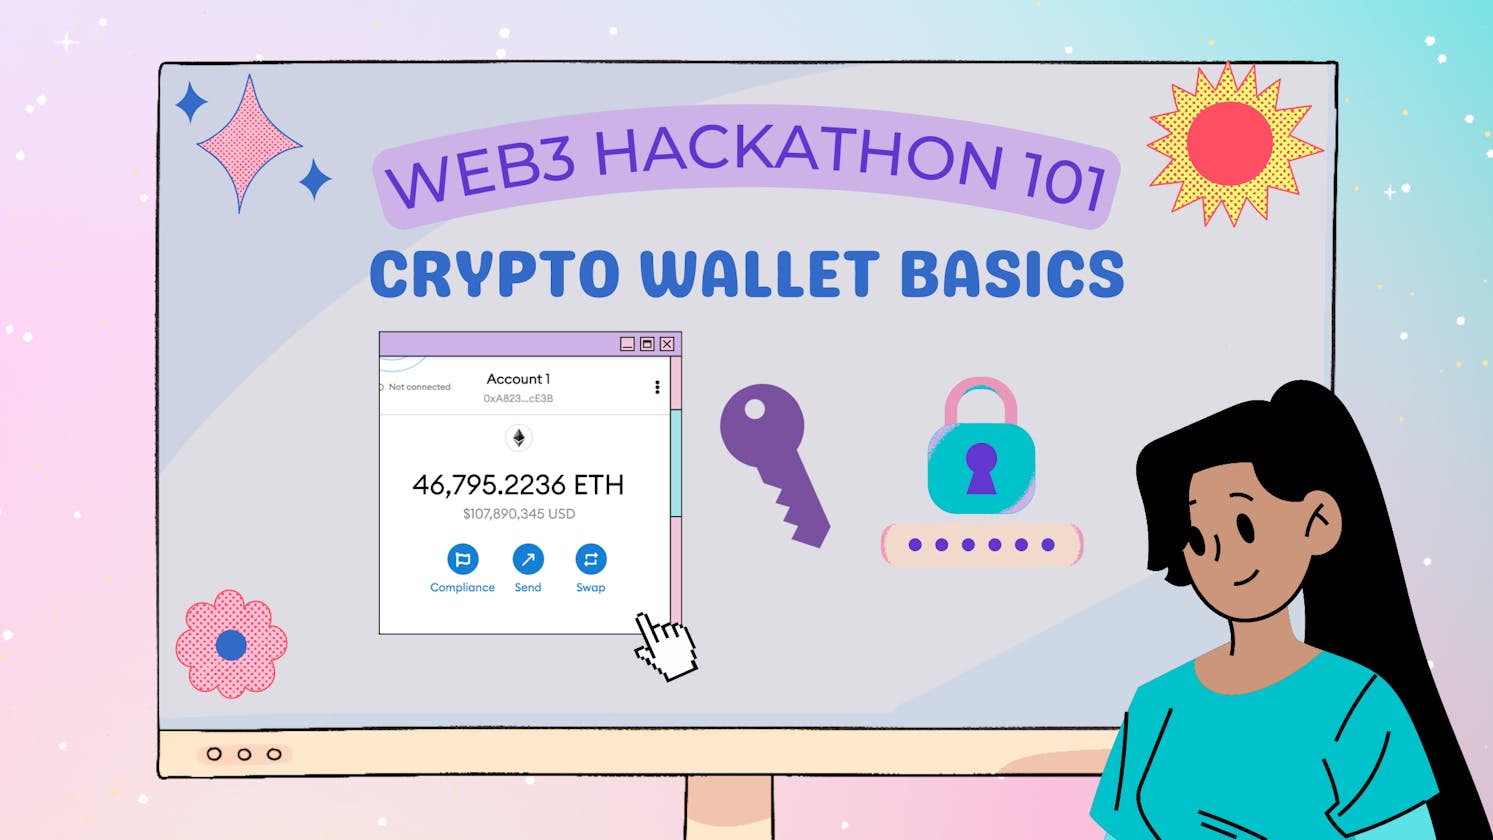 Web3 Hackathon 101: Crypto Wallet Basics